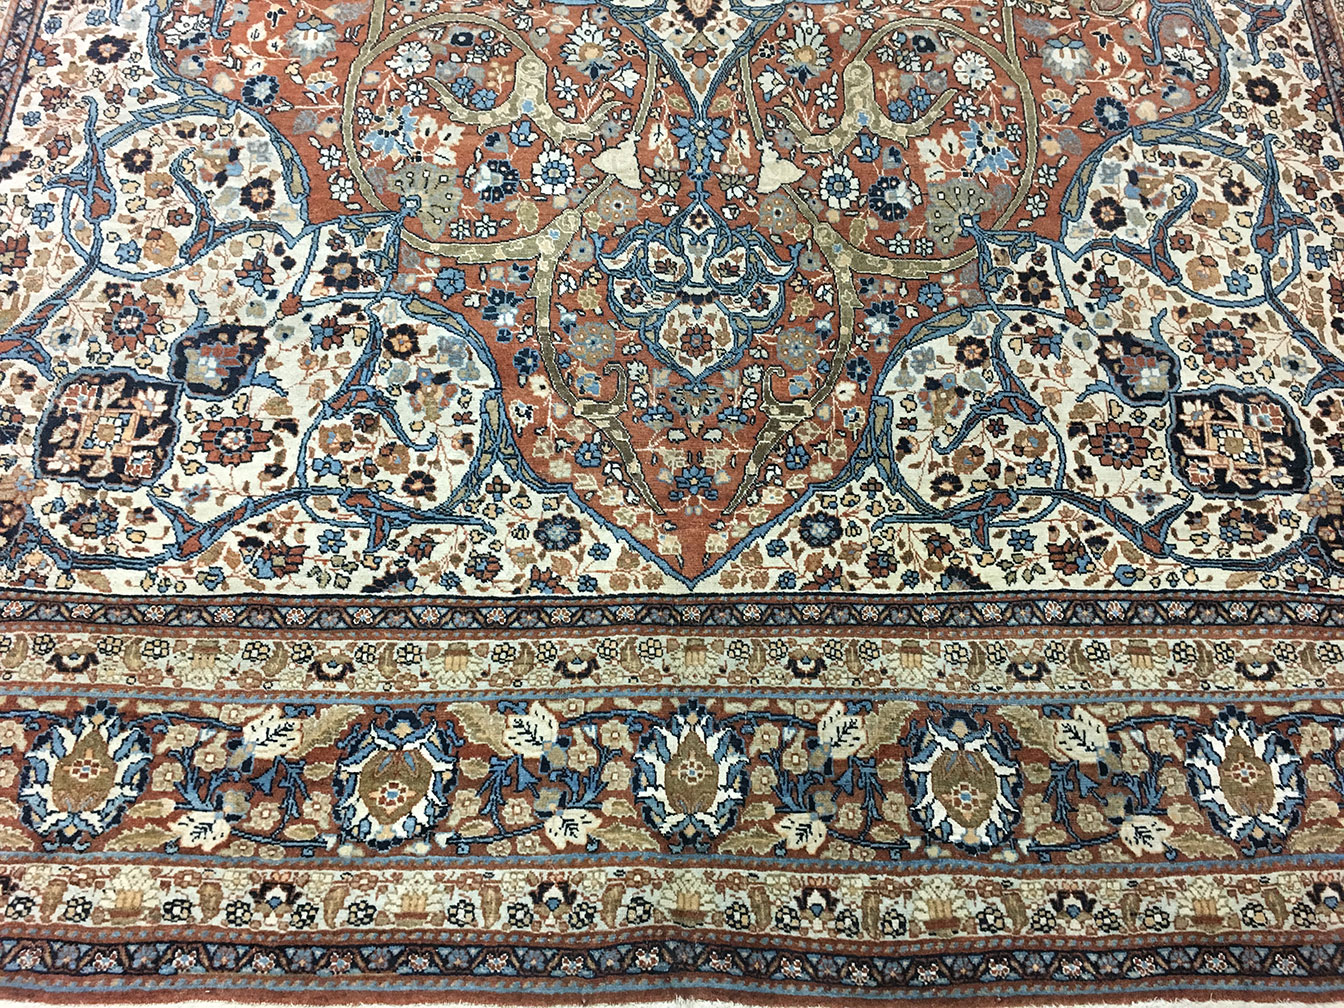 Antique tabriz Carpet - # 55315